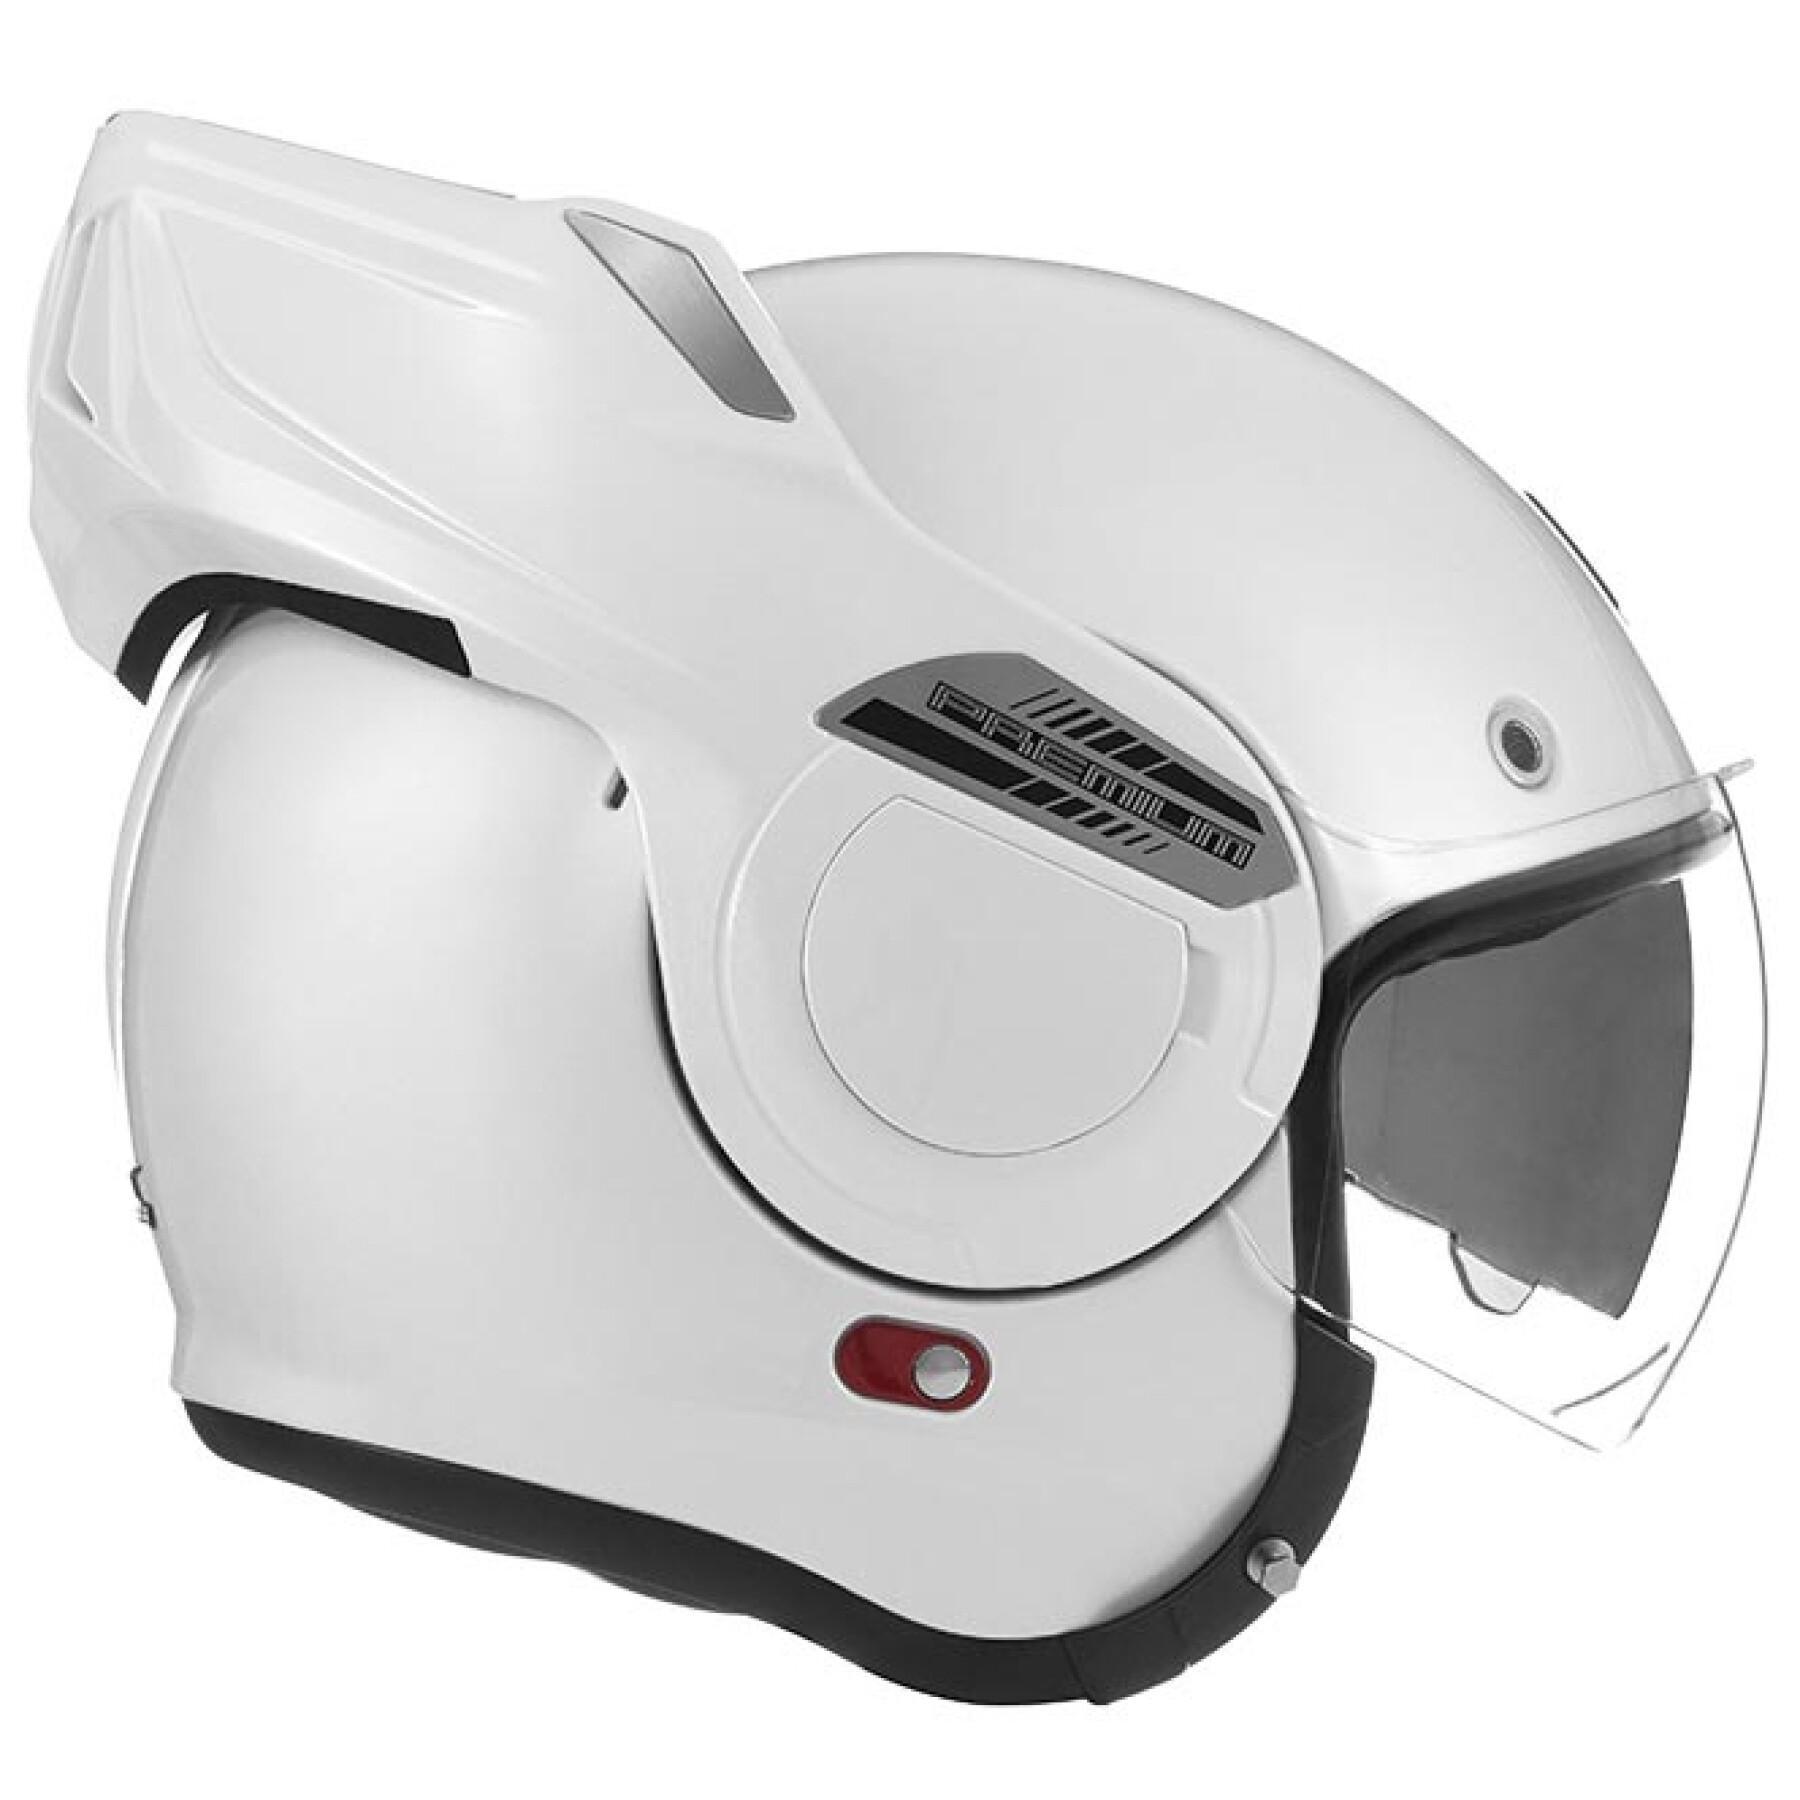 Modular helmet Nox Premium STRATOS